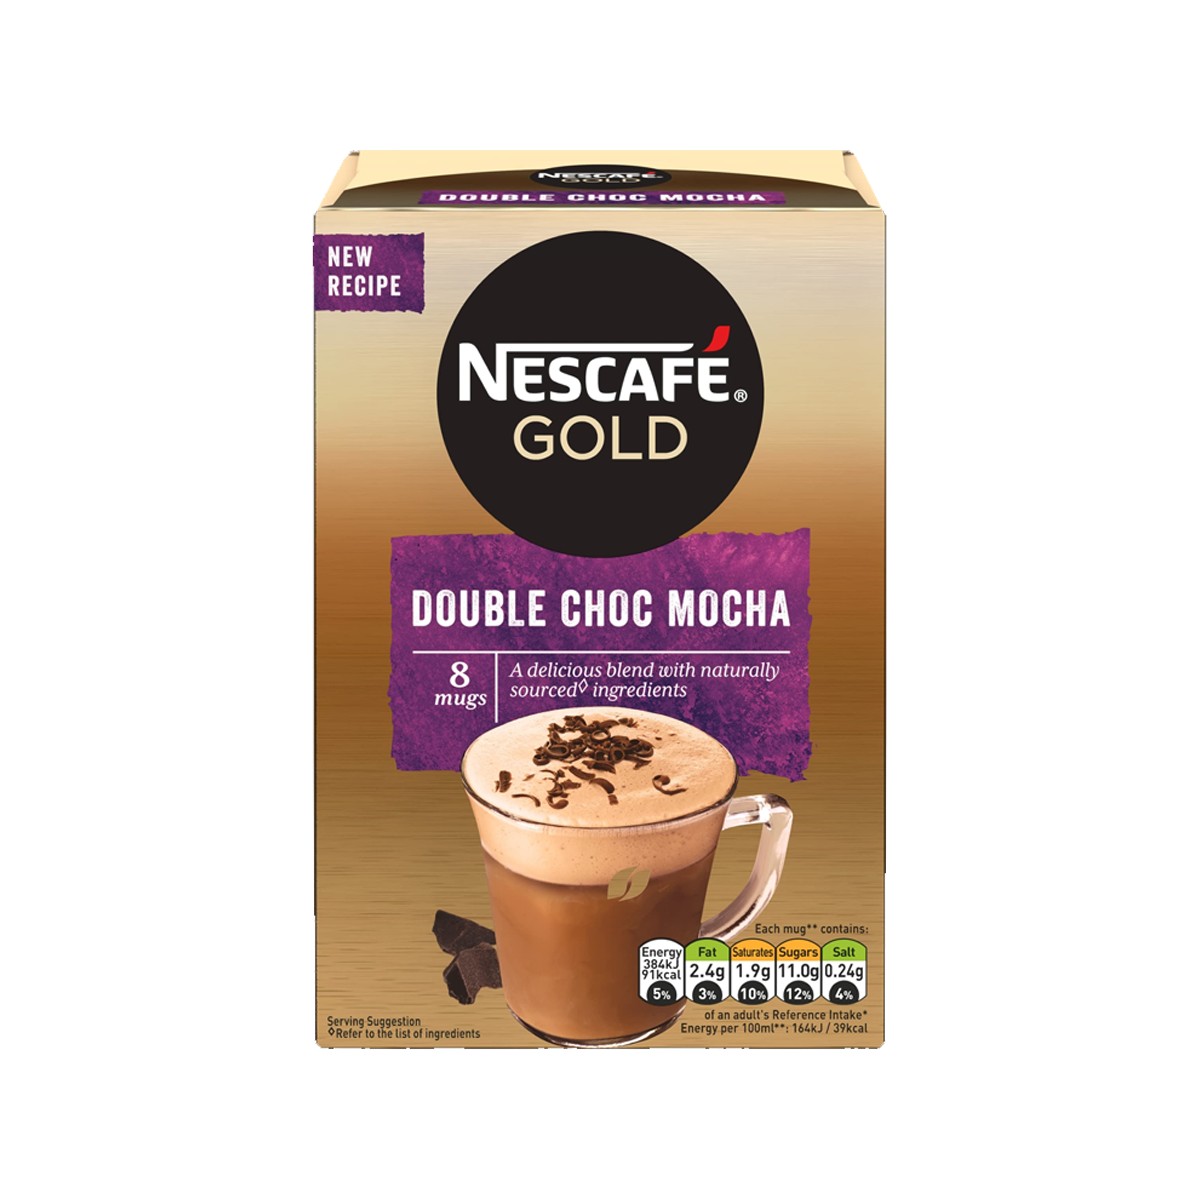 Nescafe Gold Double Choc Mocha 20.9g